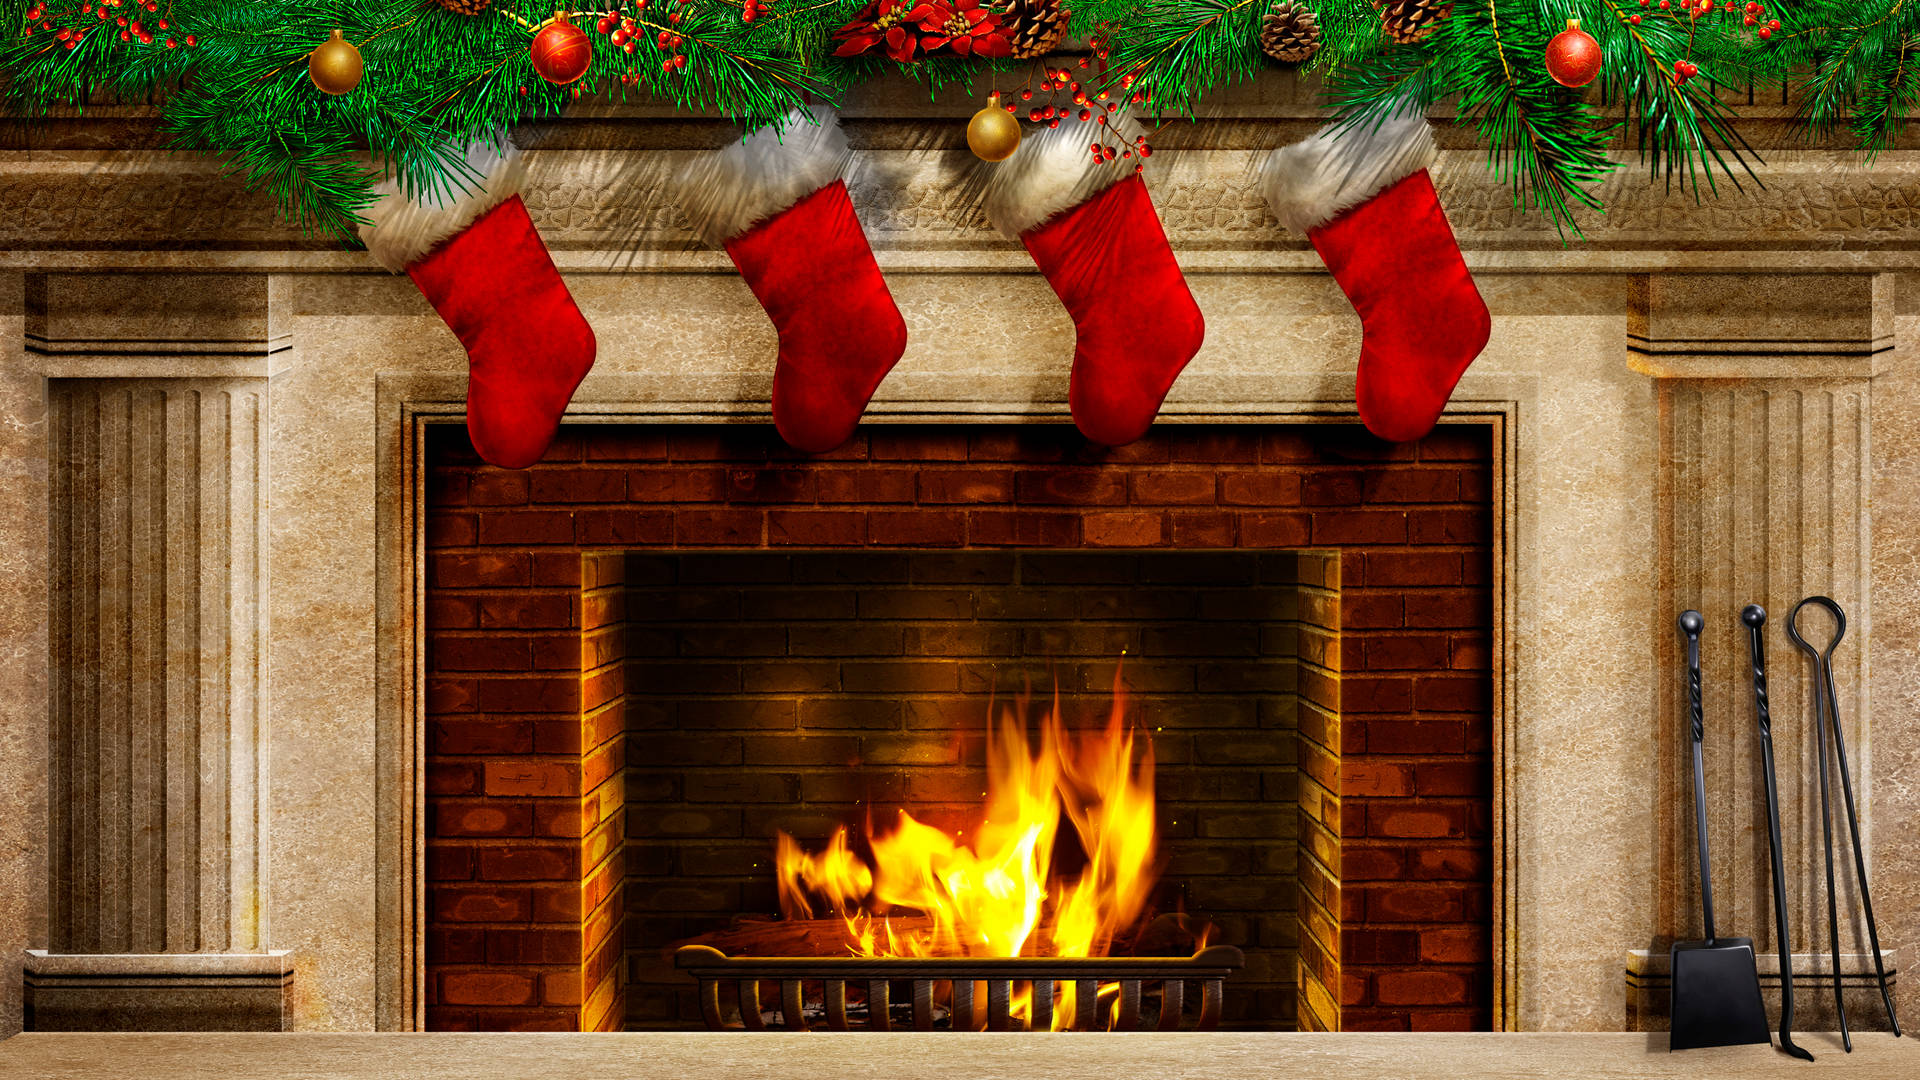 Fireplace With Beautiful Christmas Stockings